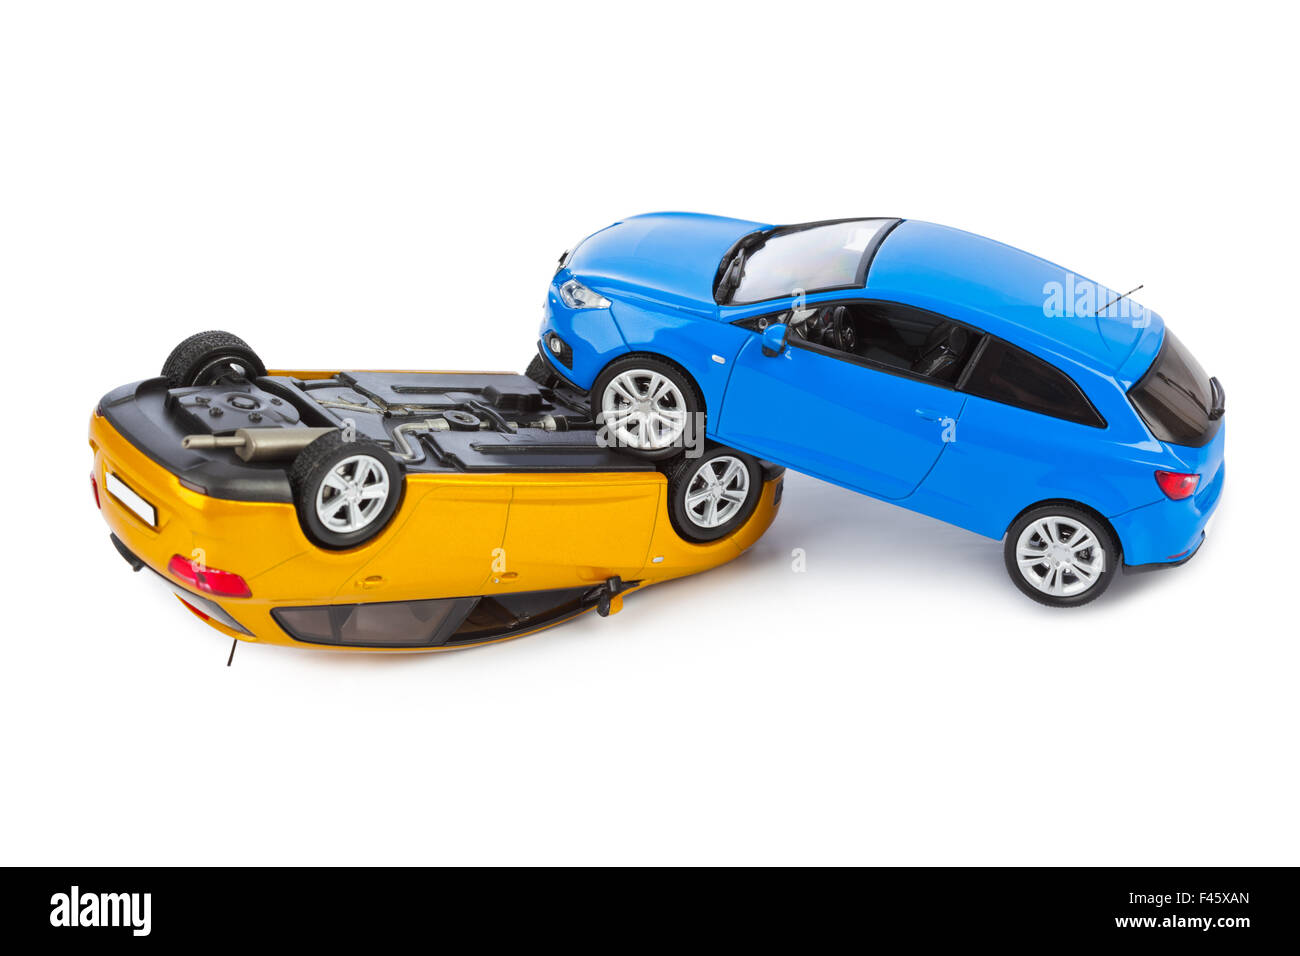 Crash toy cars Stock Photo